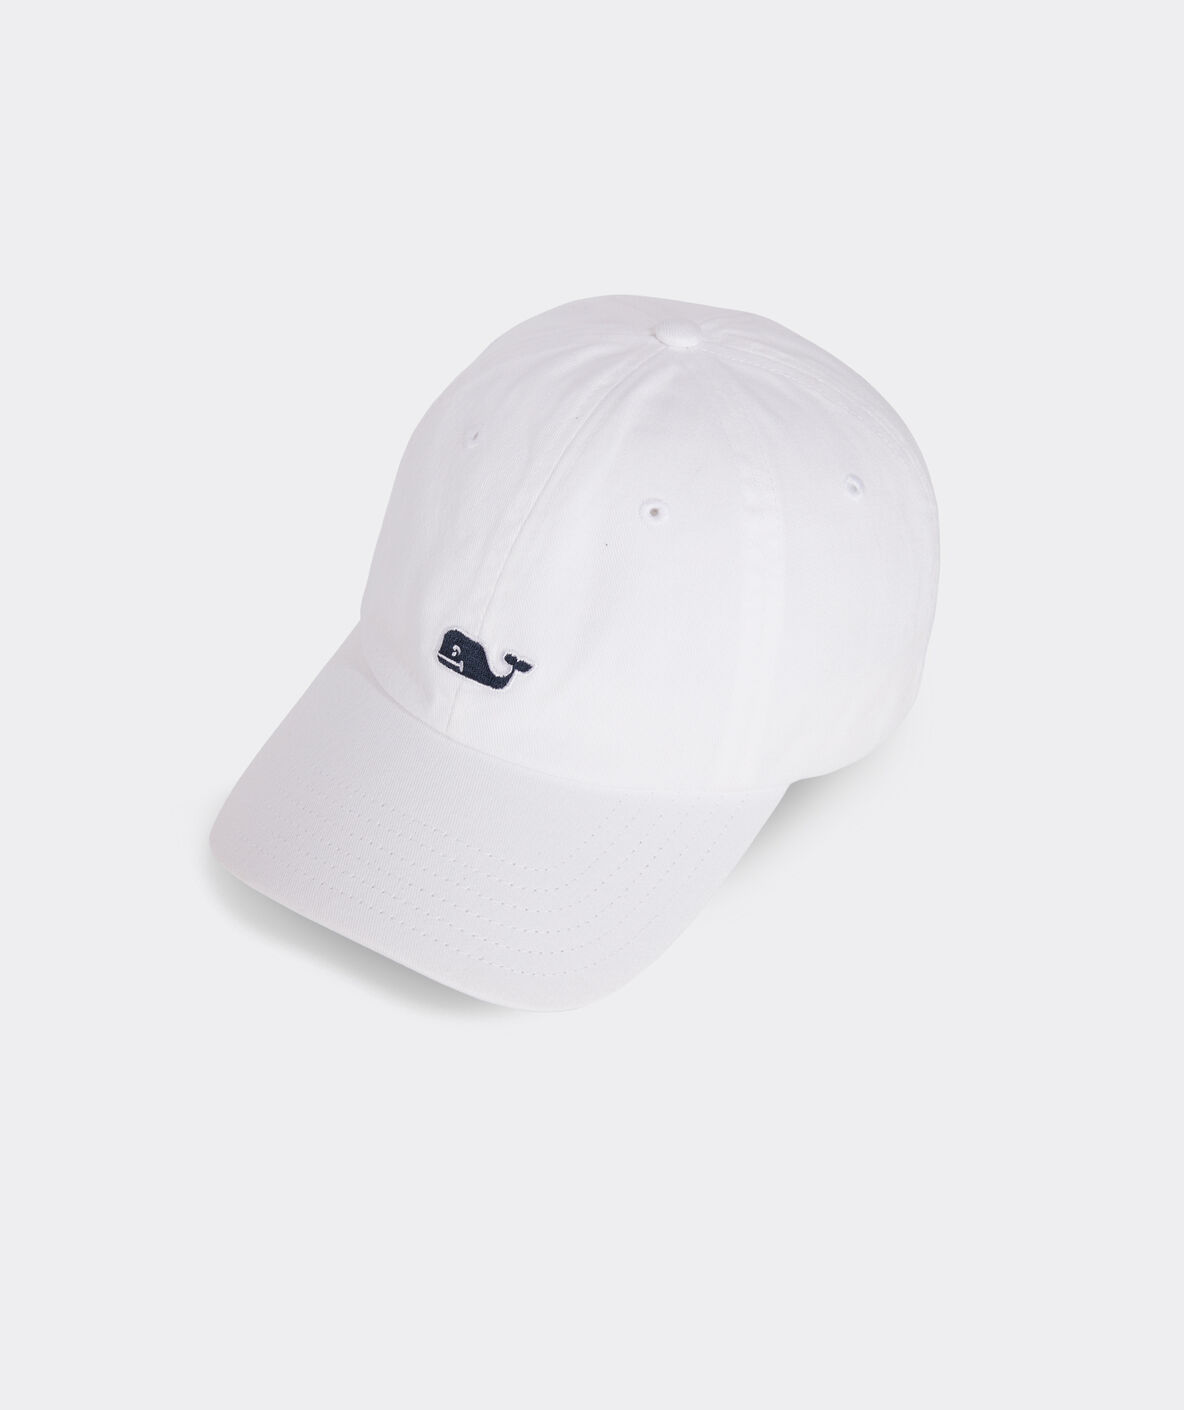 12ct. Custom Vineyard Vines Flamingo Performance Hat by Corporate Gear